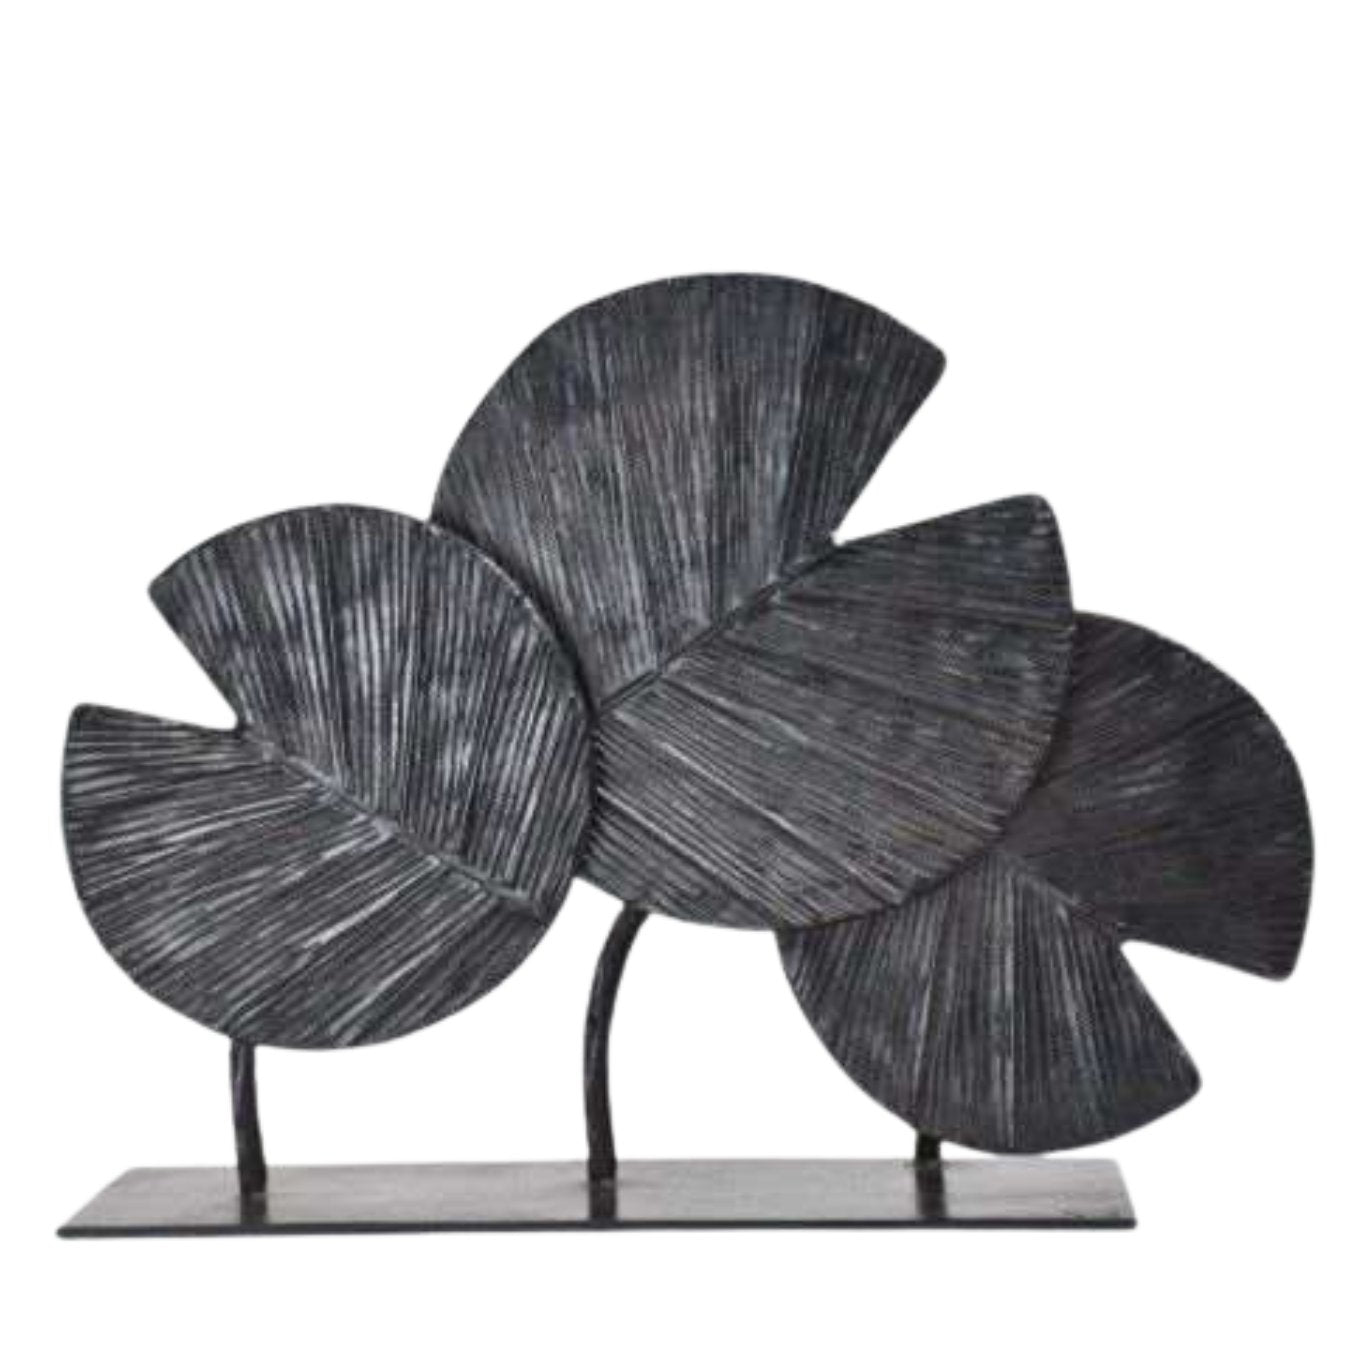 Iron Leaf Art Piece with Textured Finish - Unique Decor